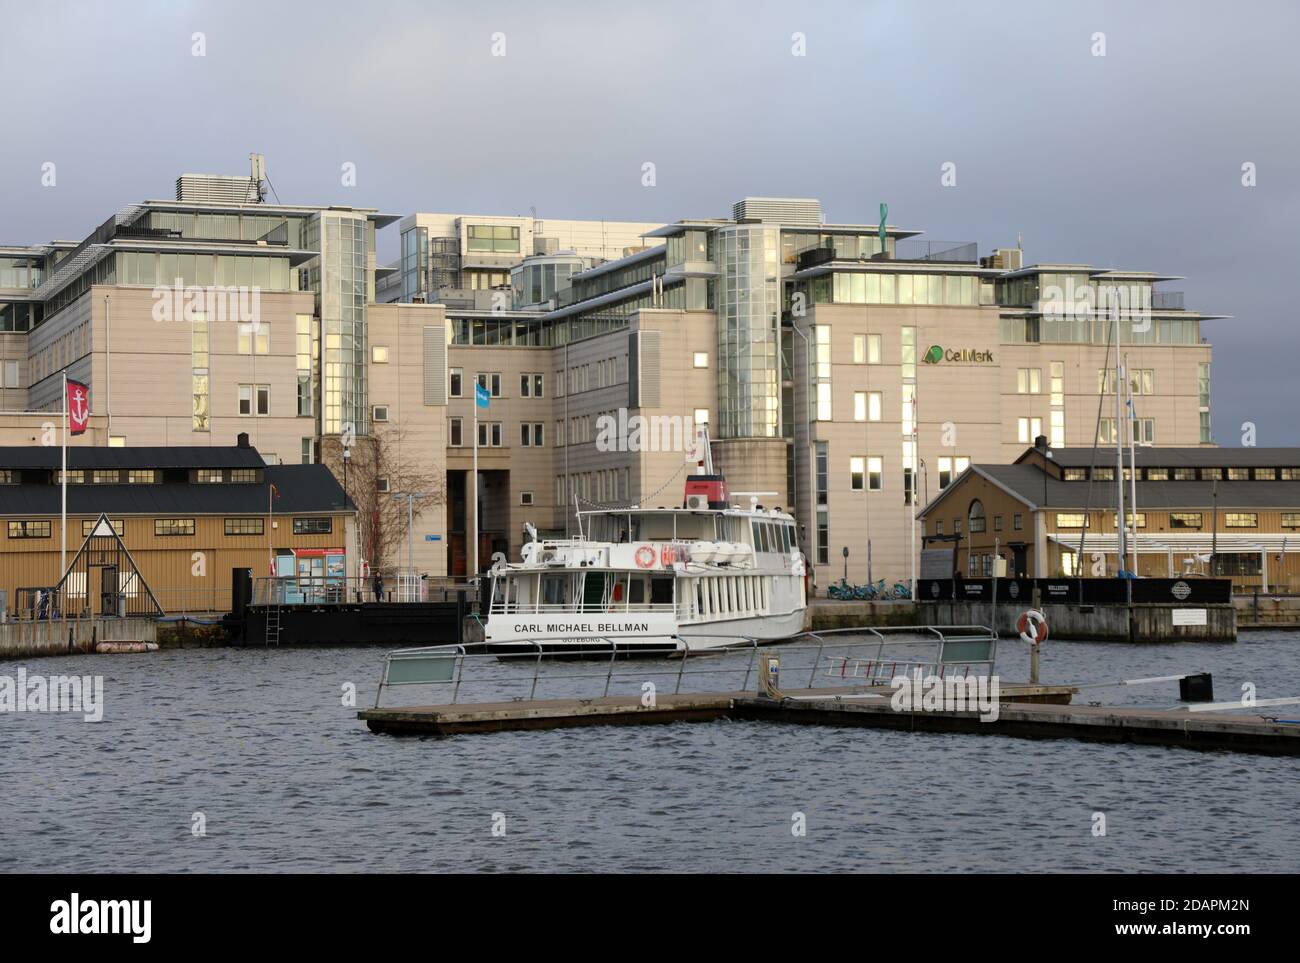 Carl Michael Bellman passenger ship at Lilla Bommen harbour in Gothenburg Stock Photo